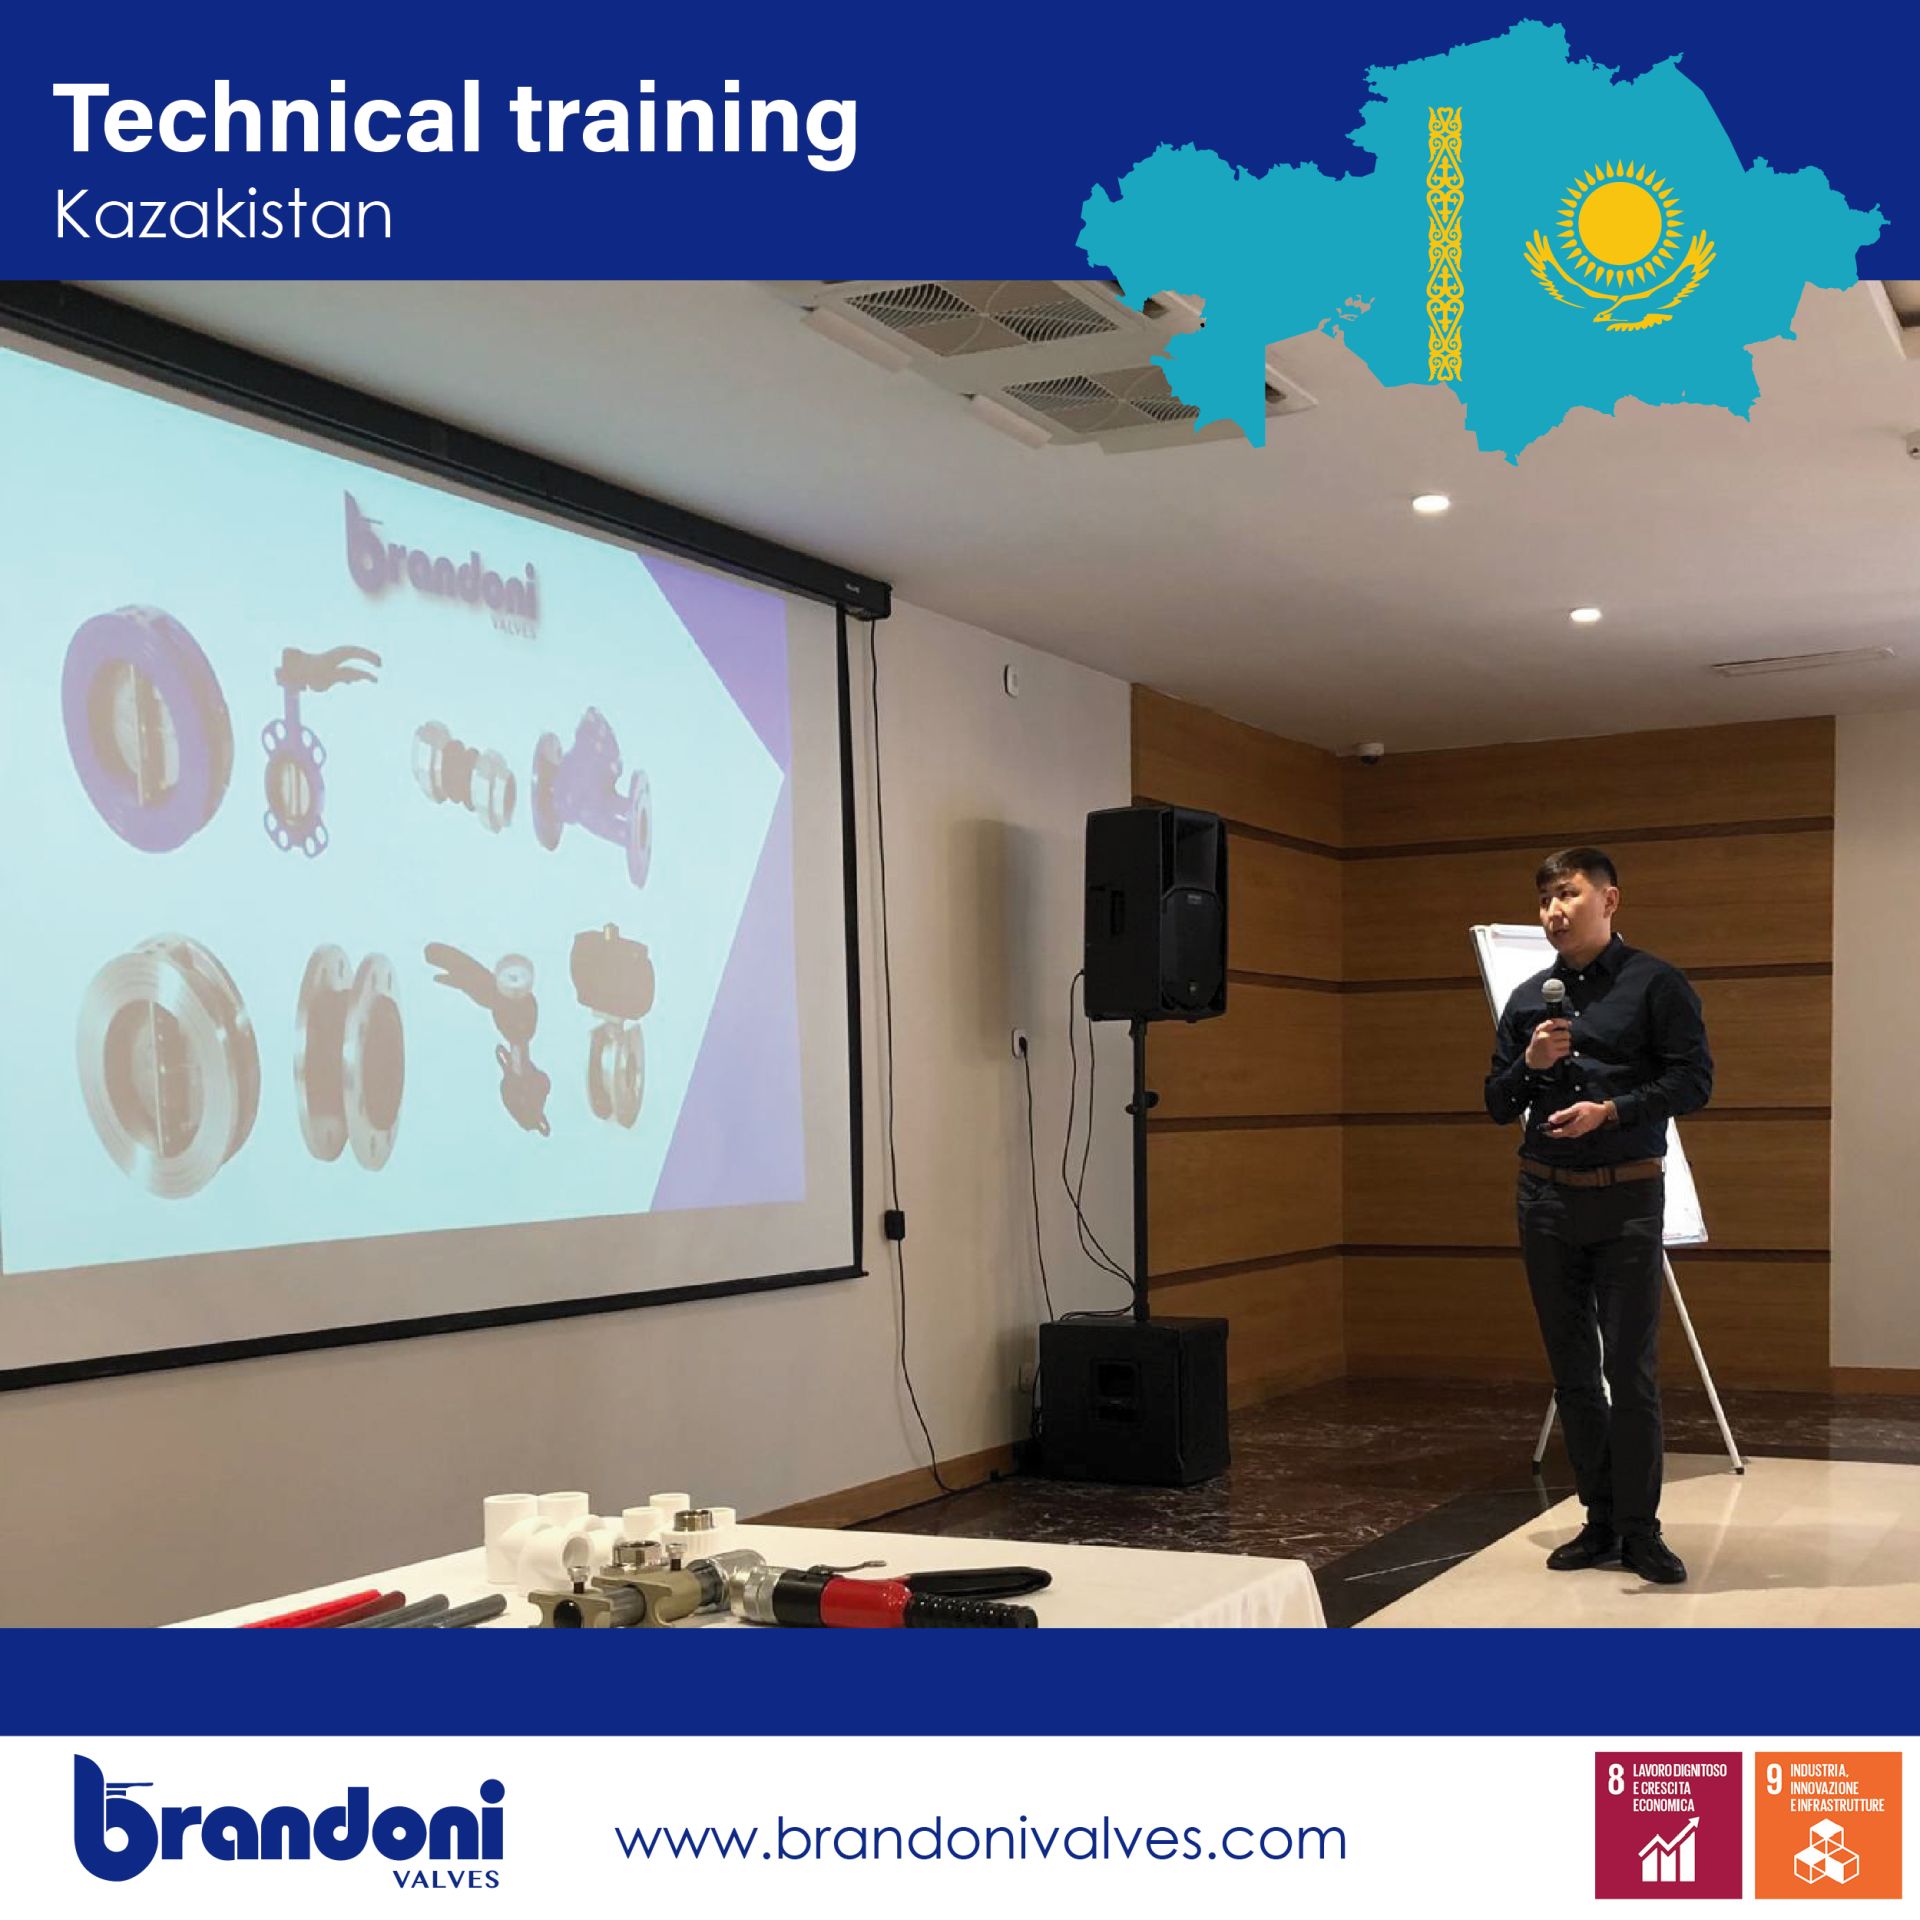 Brandoni Technical training in Kazakistan